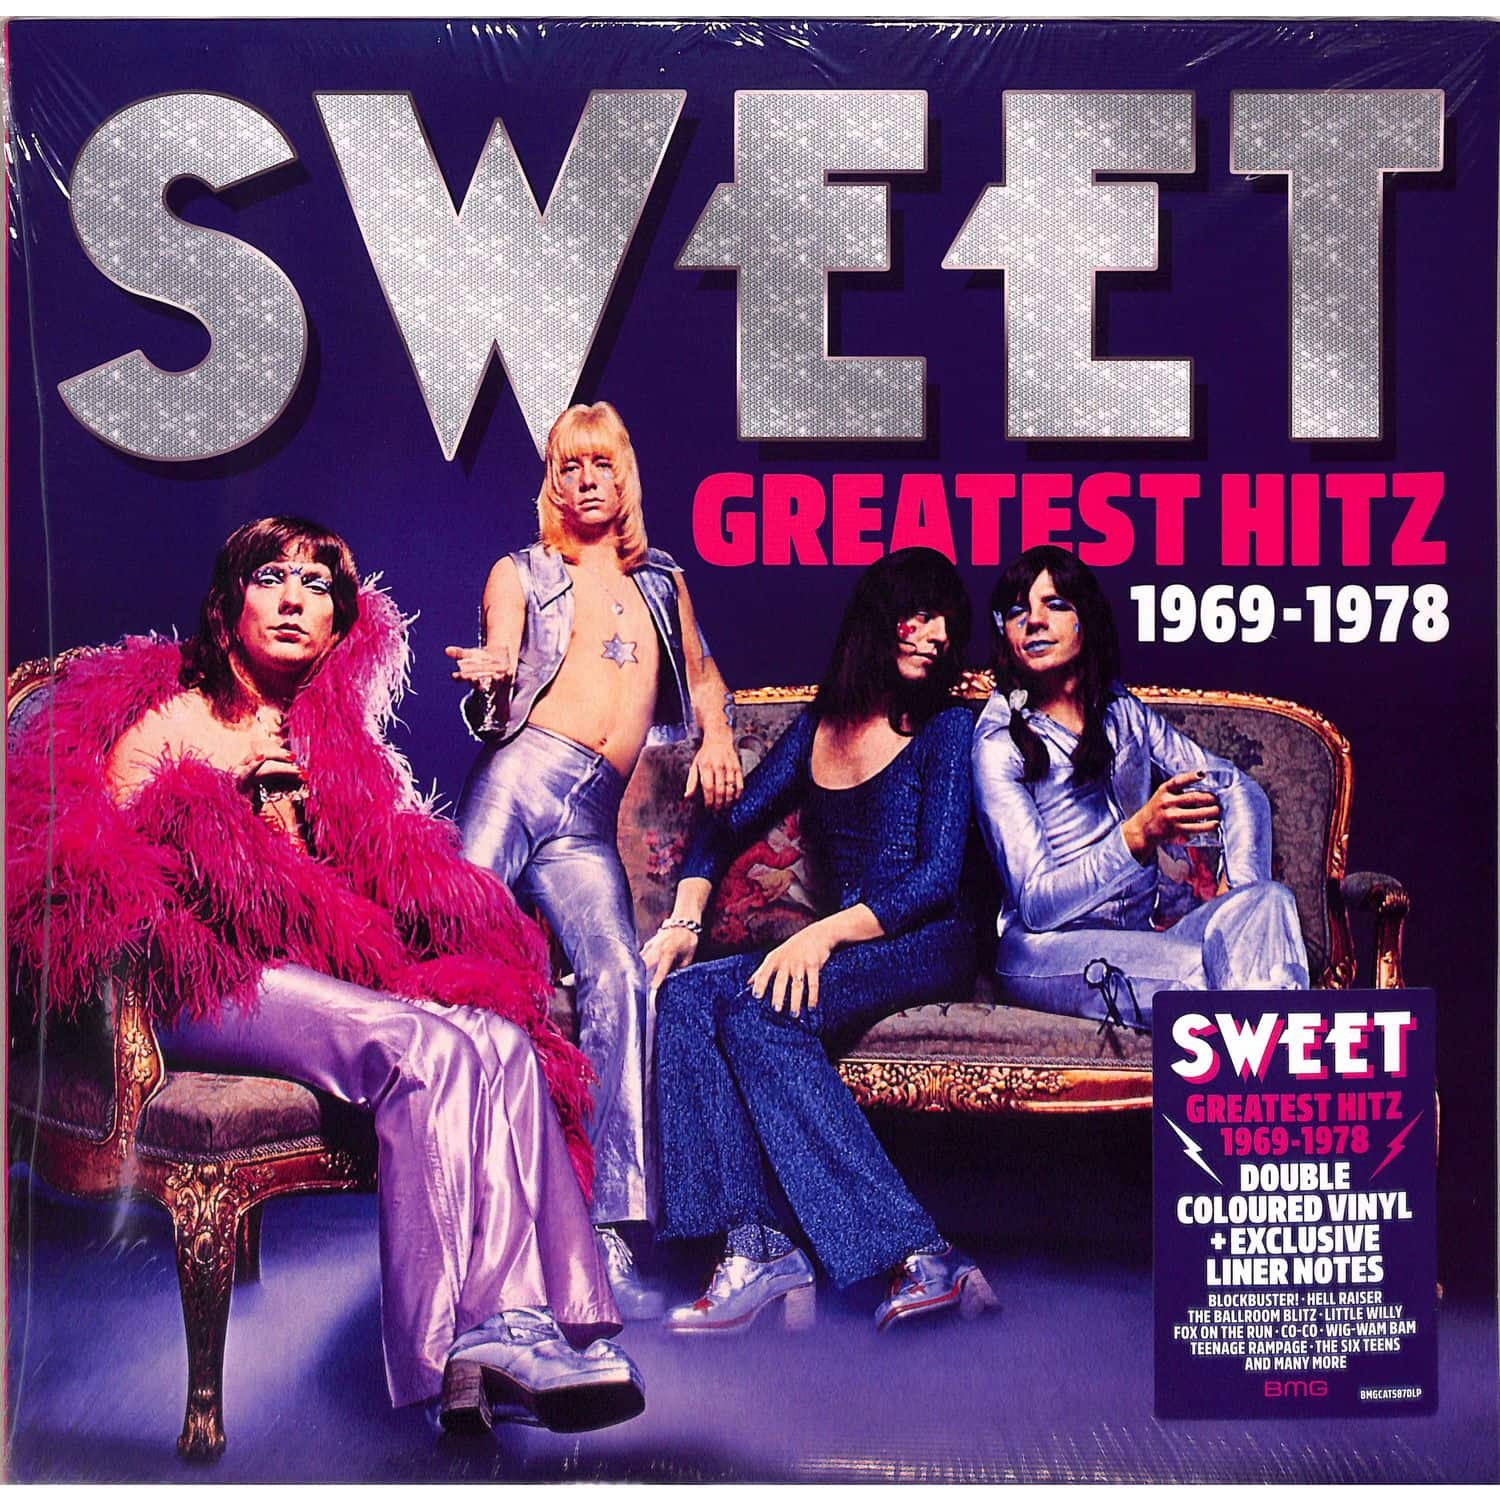 Sweet - GREATEST HITZ! THE BEST OF SWEET 1969-1978 